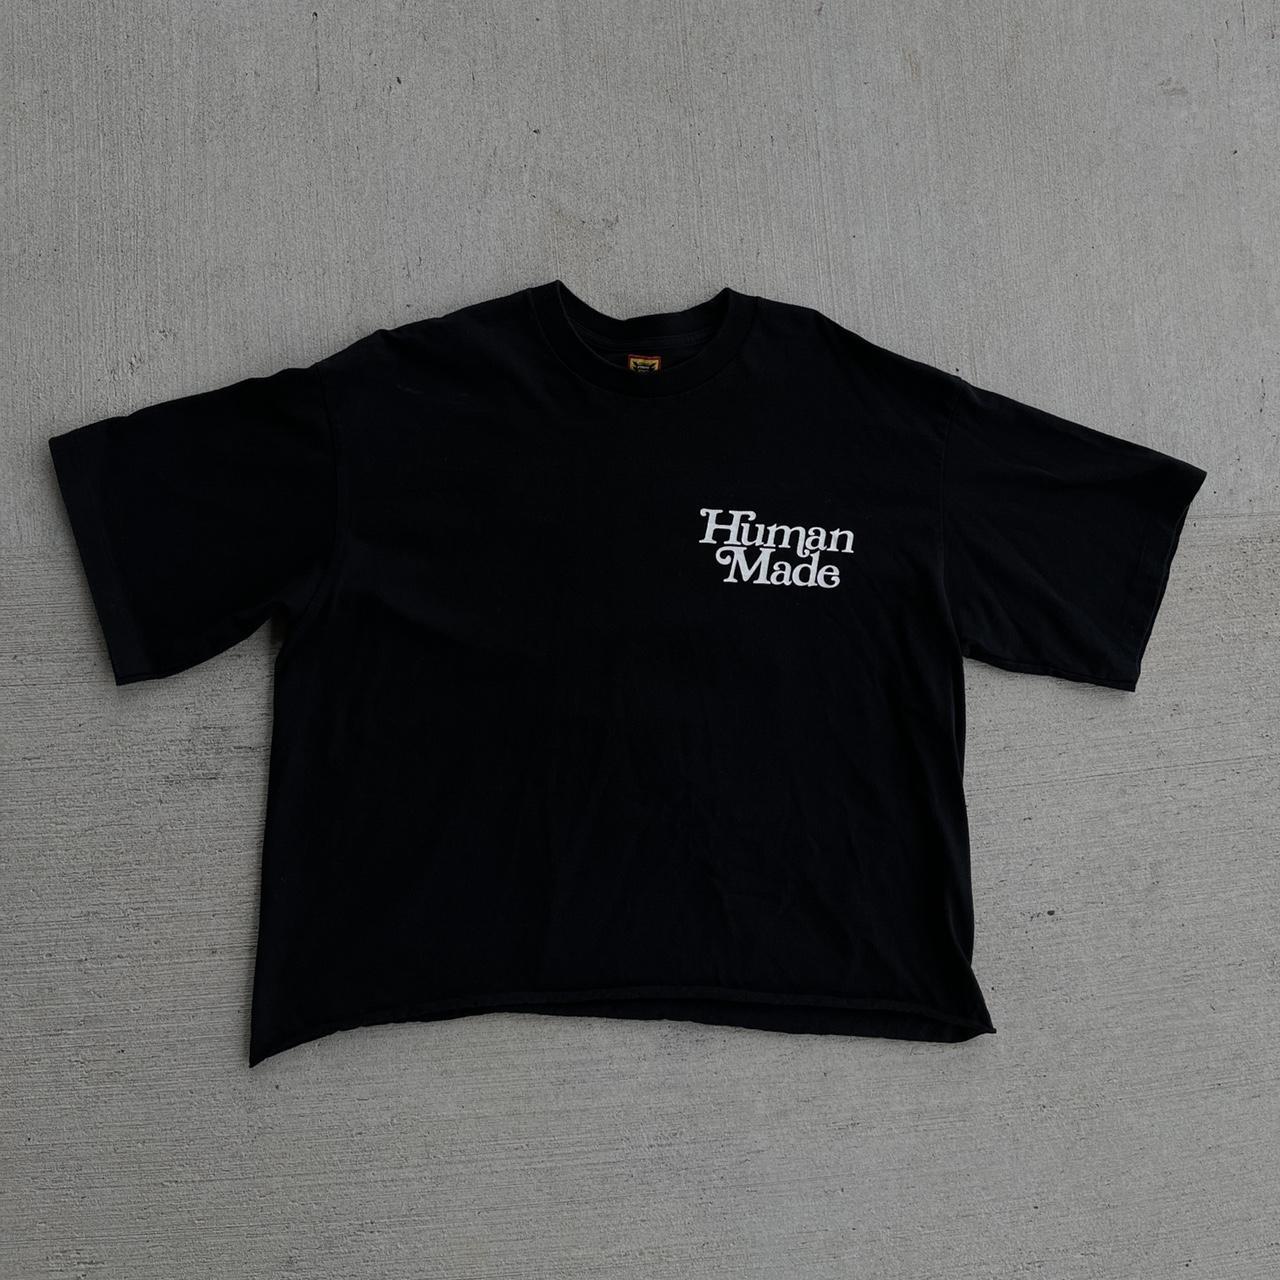 Human Made Men's Black and White T-shirt | Depop